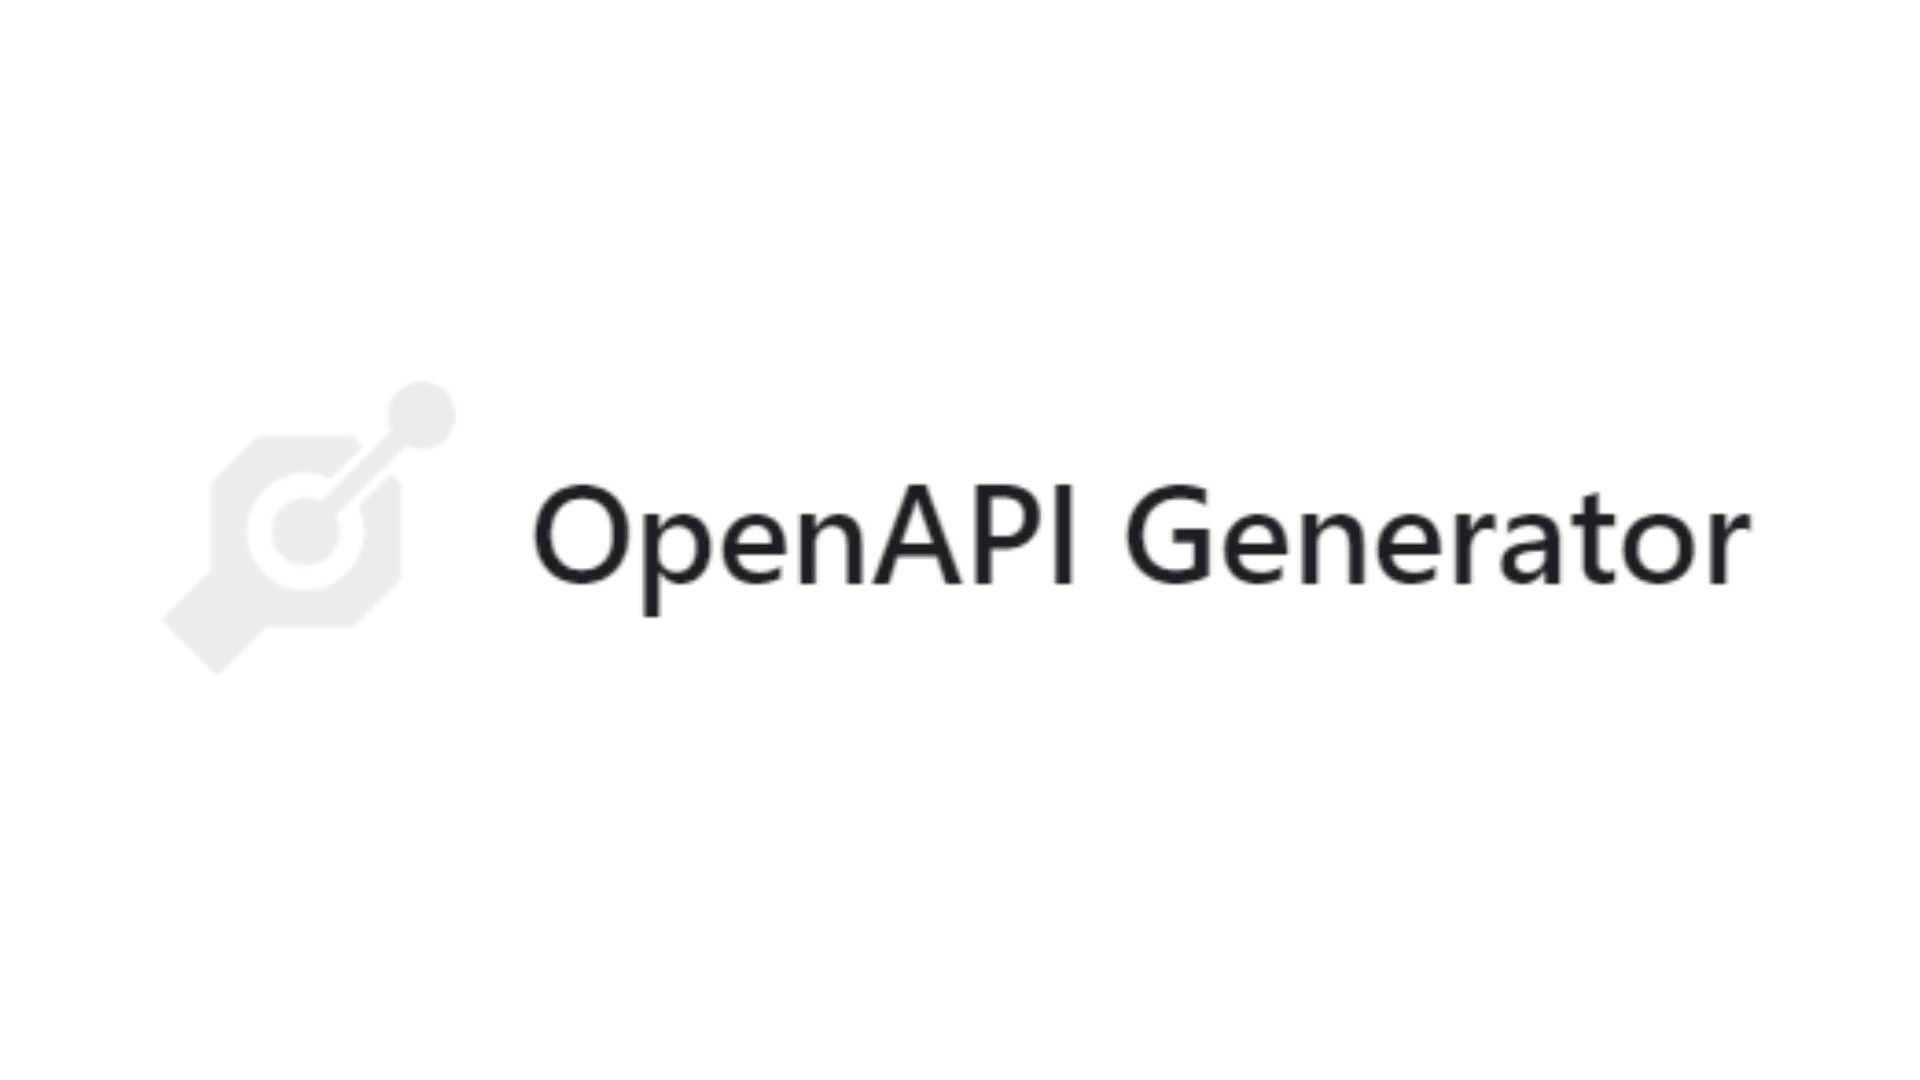 OpenAPI Generator